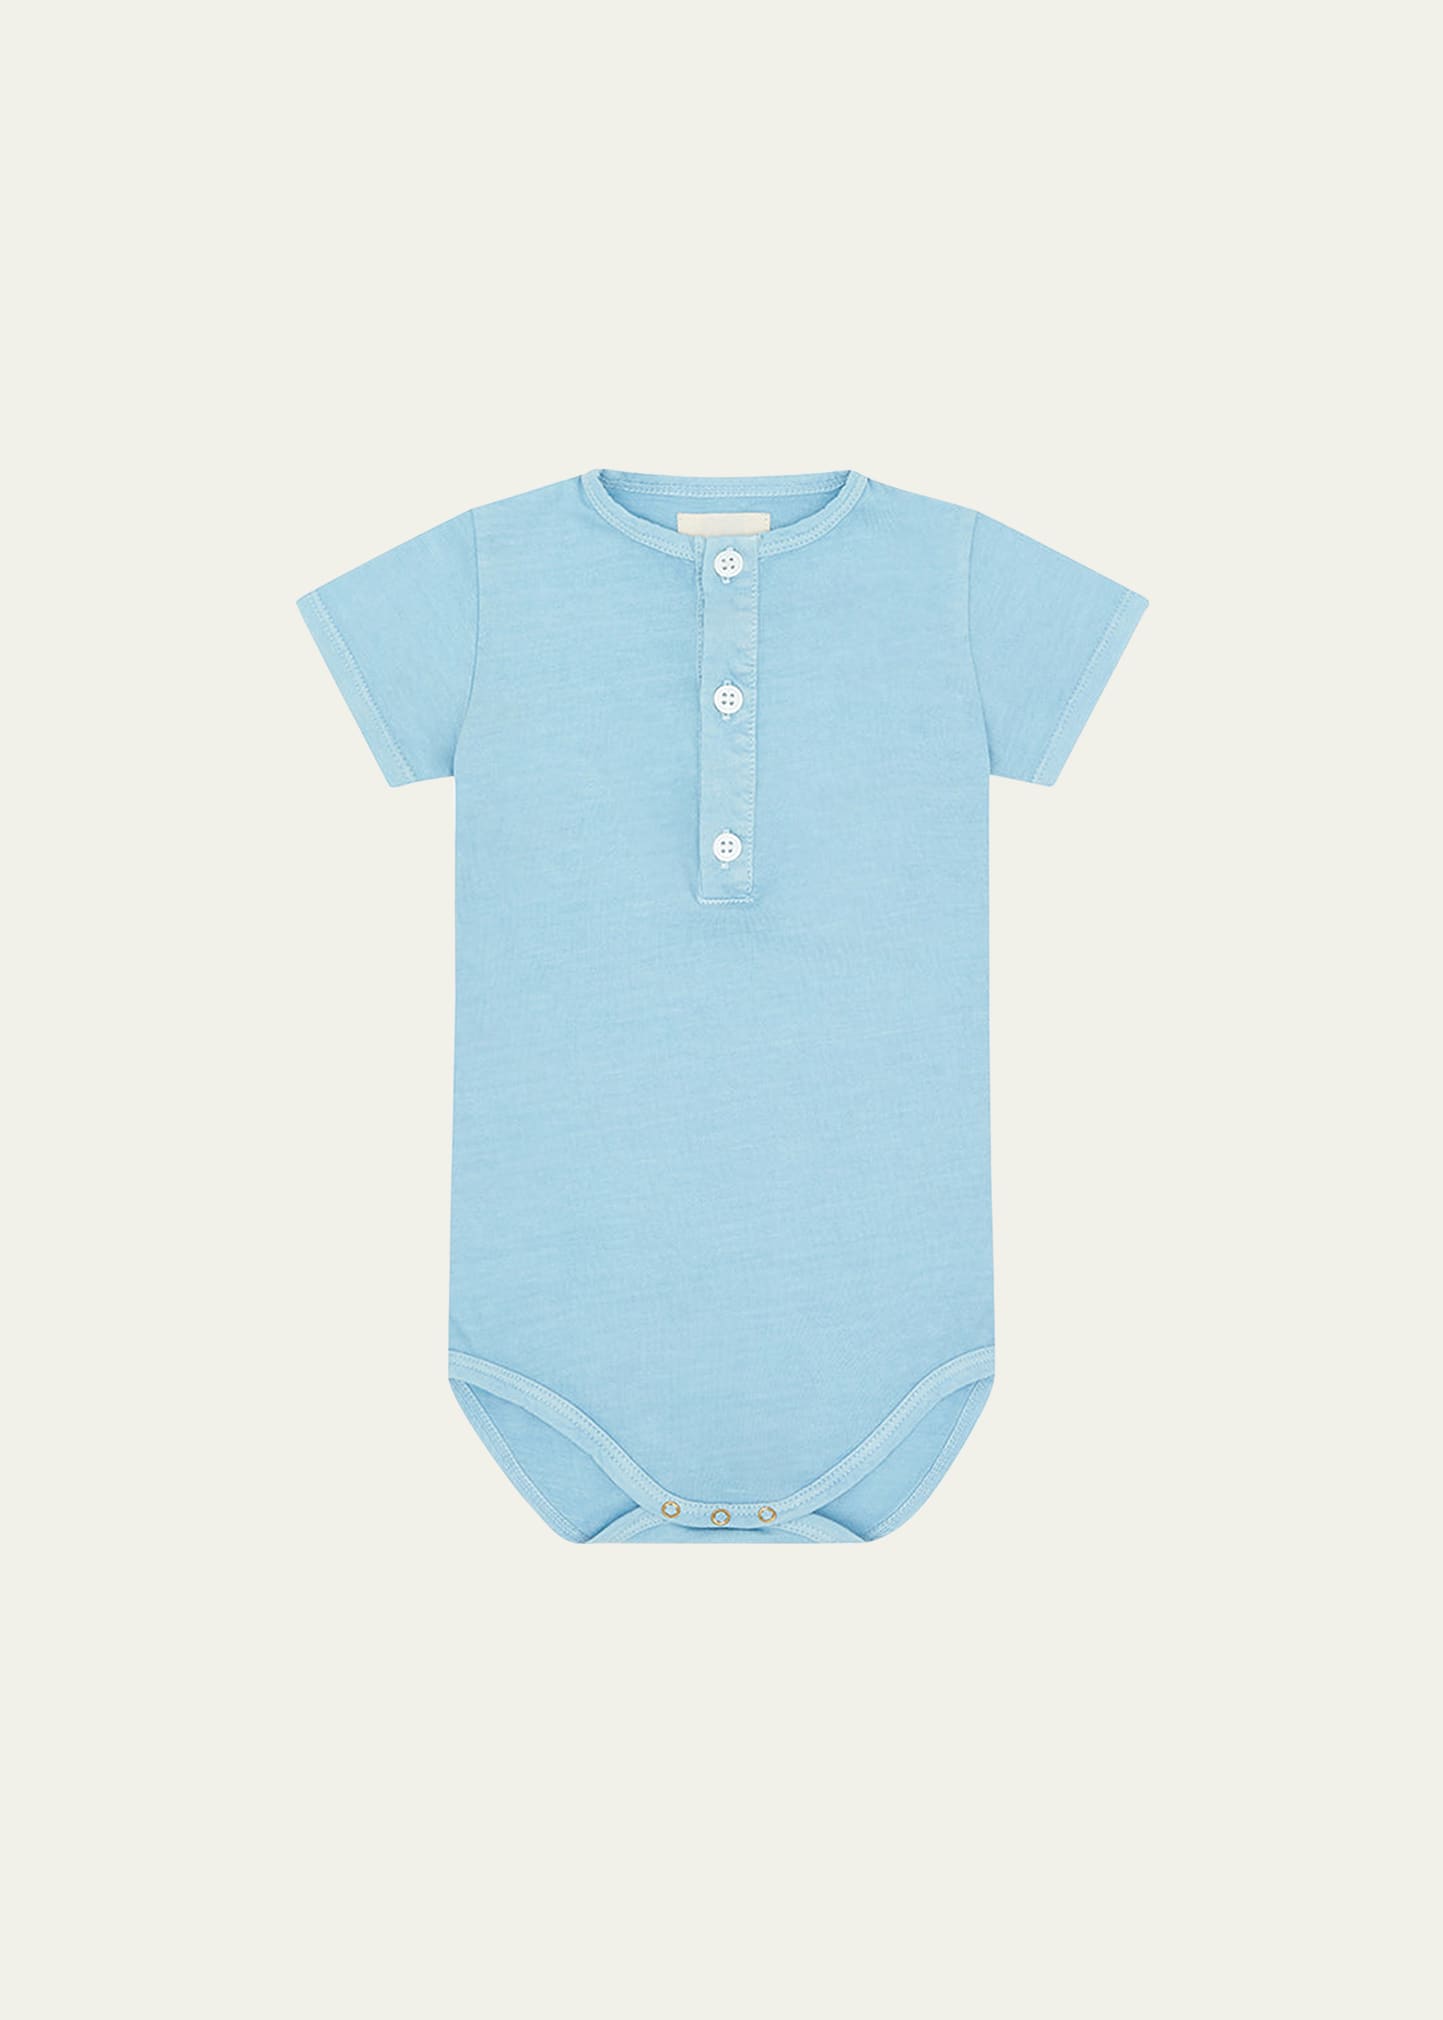 Kid's Organic Cotton Bodysuit, Size Newborn-24M